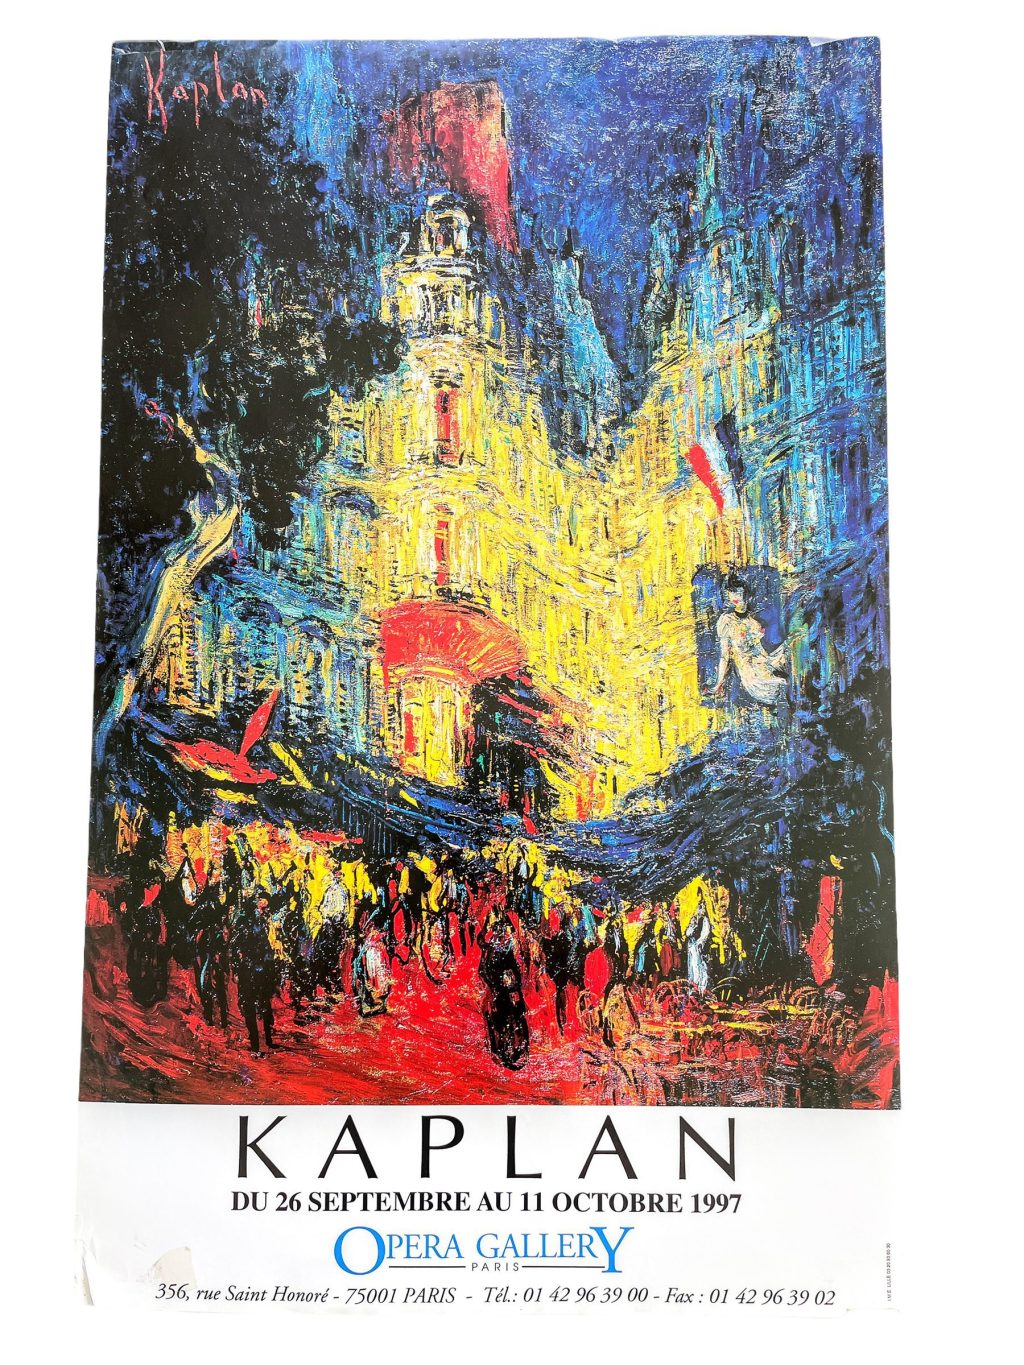 Vintage French Kaplan Opera Gallerie Paris Gallery Original Exhibition Poster Wall Decor Painting Display Artwork c1997 / EVE